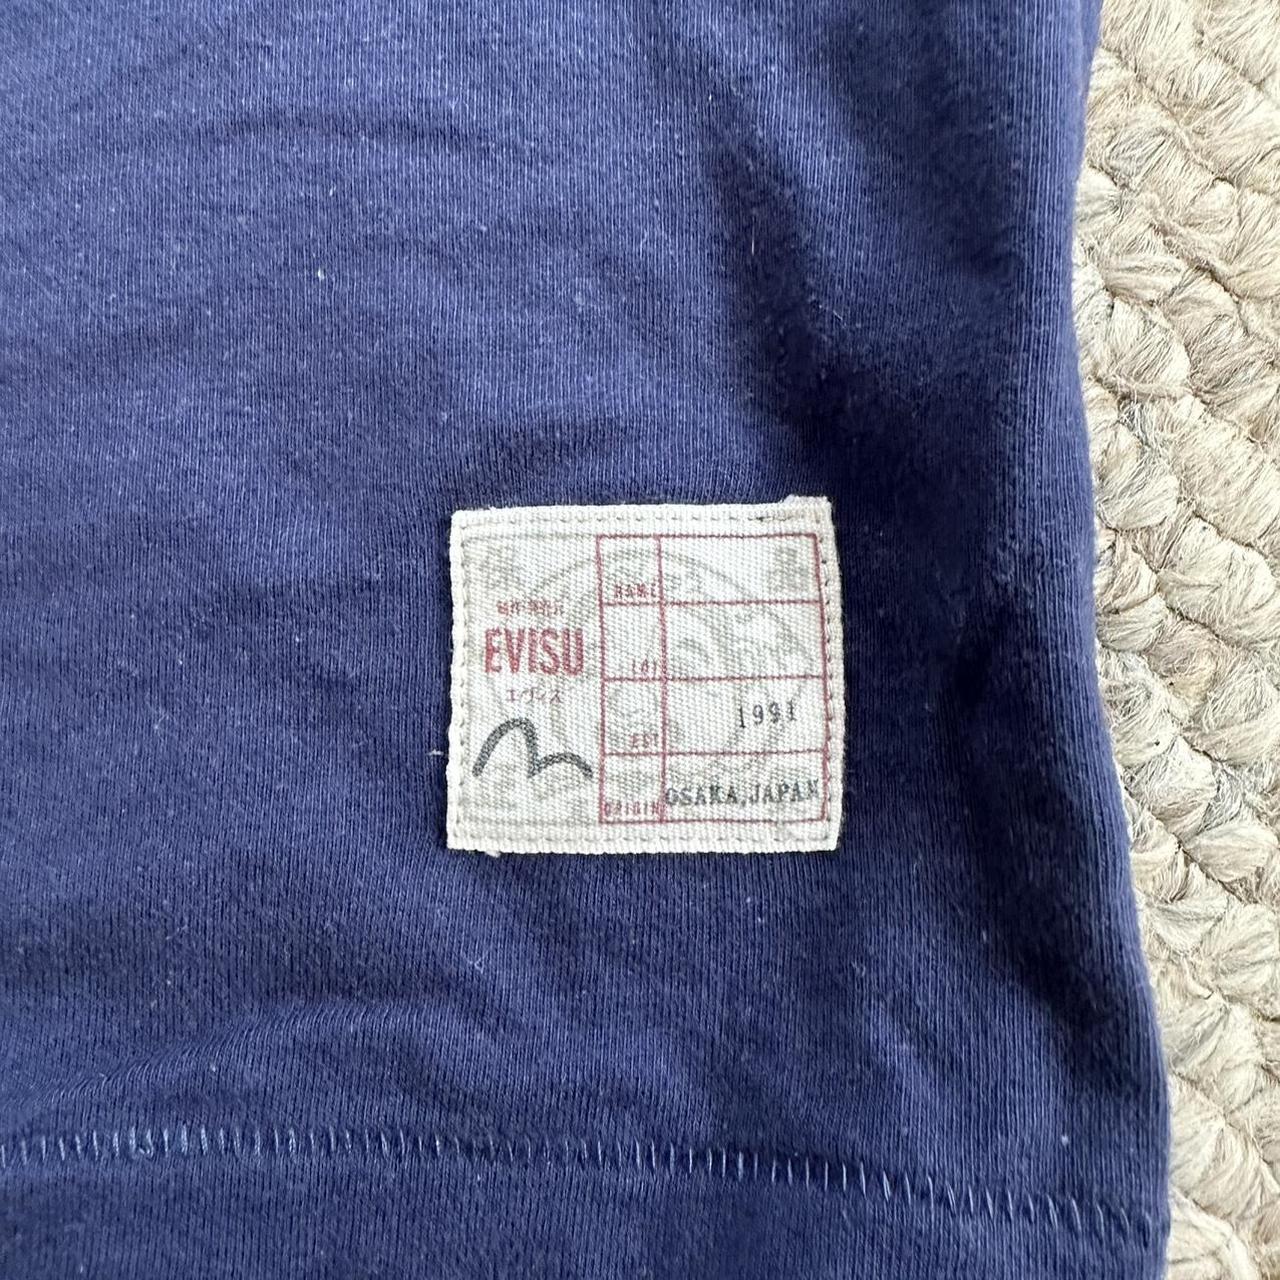 Vintage evisu t-shirt Tag reads XL but fits like an M - Depop